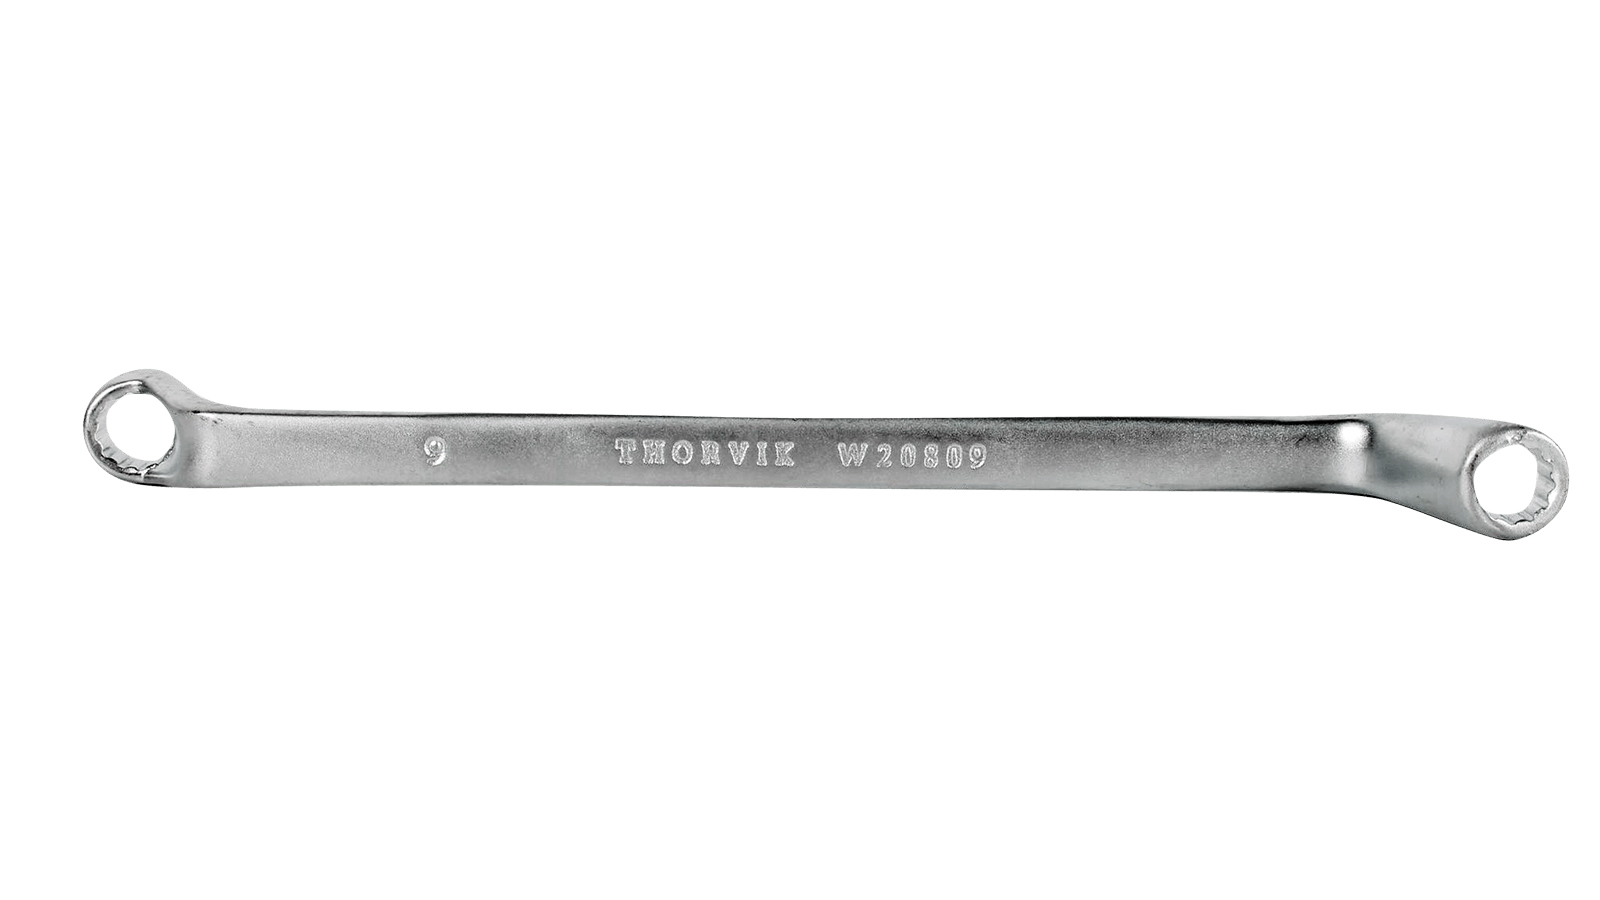 Ключ Накидной  8 Х 9 Thorvik Серии Arc THORVIK арт. W20809 имбусовый ключ thorvik hex 6 мм